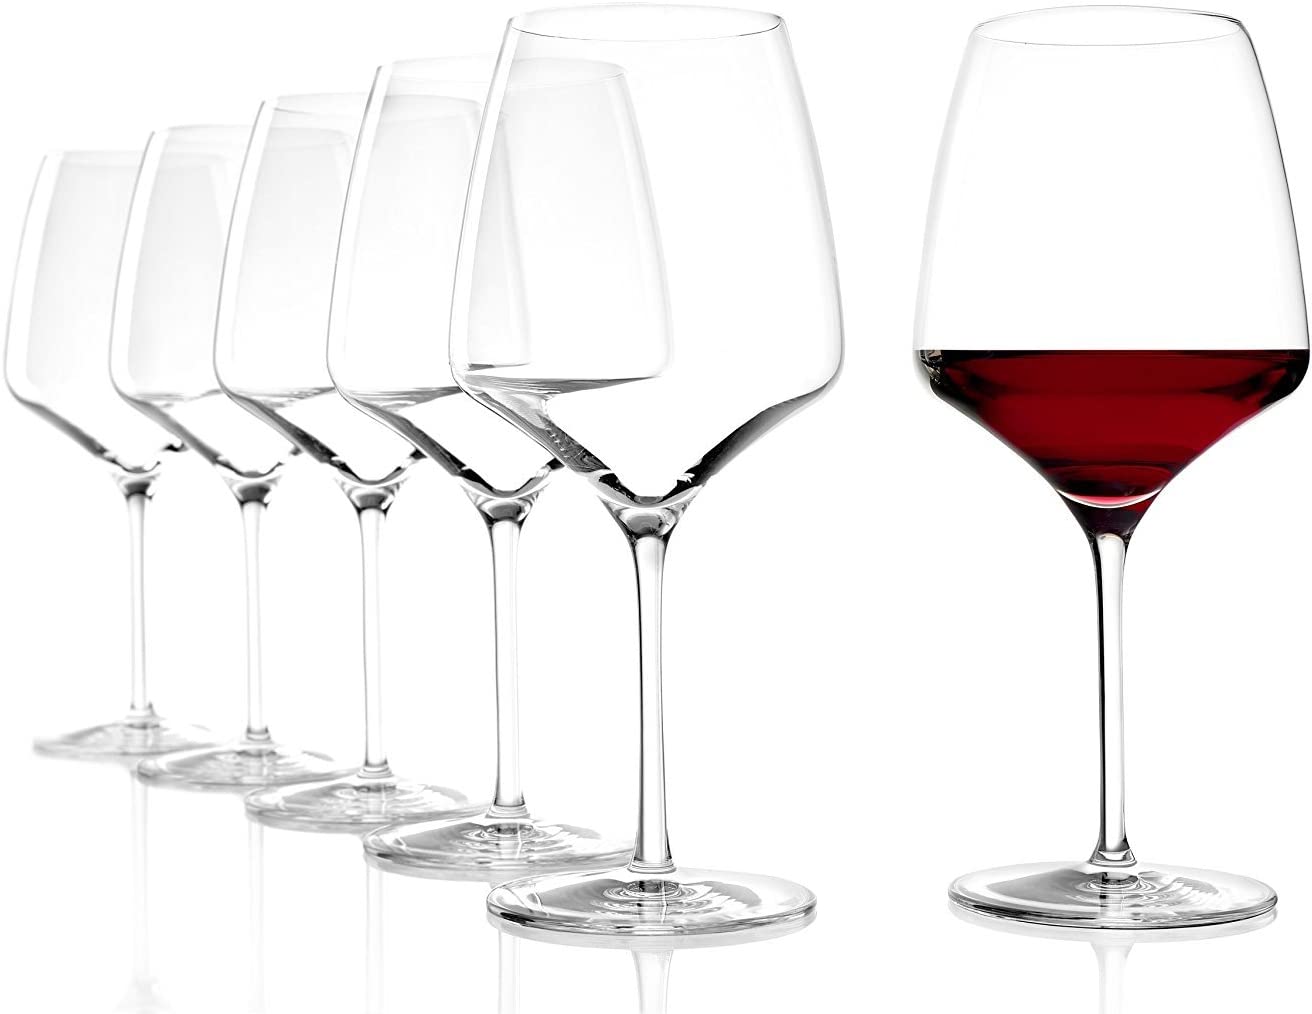 STÖLZLE LAUSITZ Burgundy Experience Red Wine Glasses 695 ml I Red Wine Glasses Set of 6 I Wine Glasses Dishwasher Safe I Red Wine Glasses Set Shatterproof I Like Mouth-Blown I Highest Quality